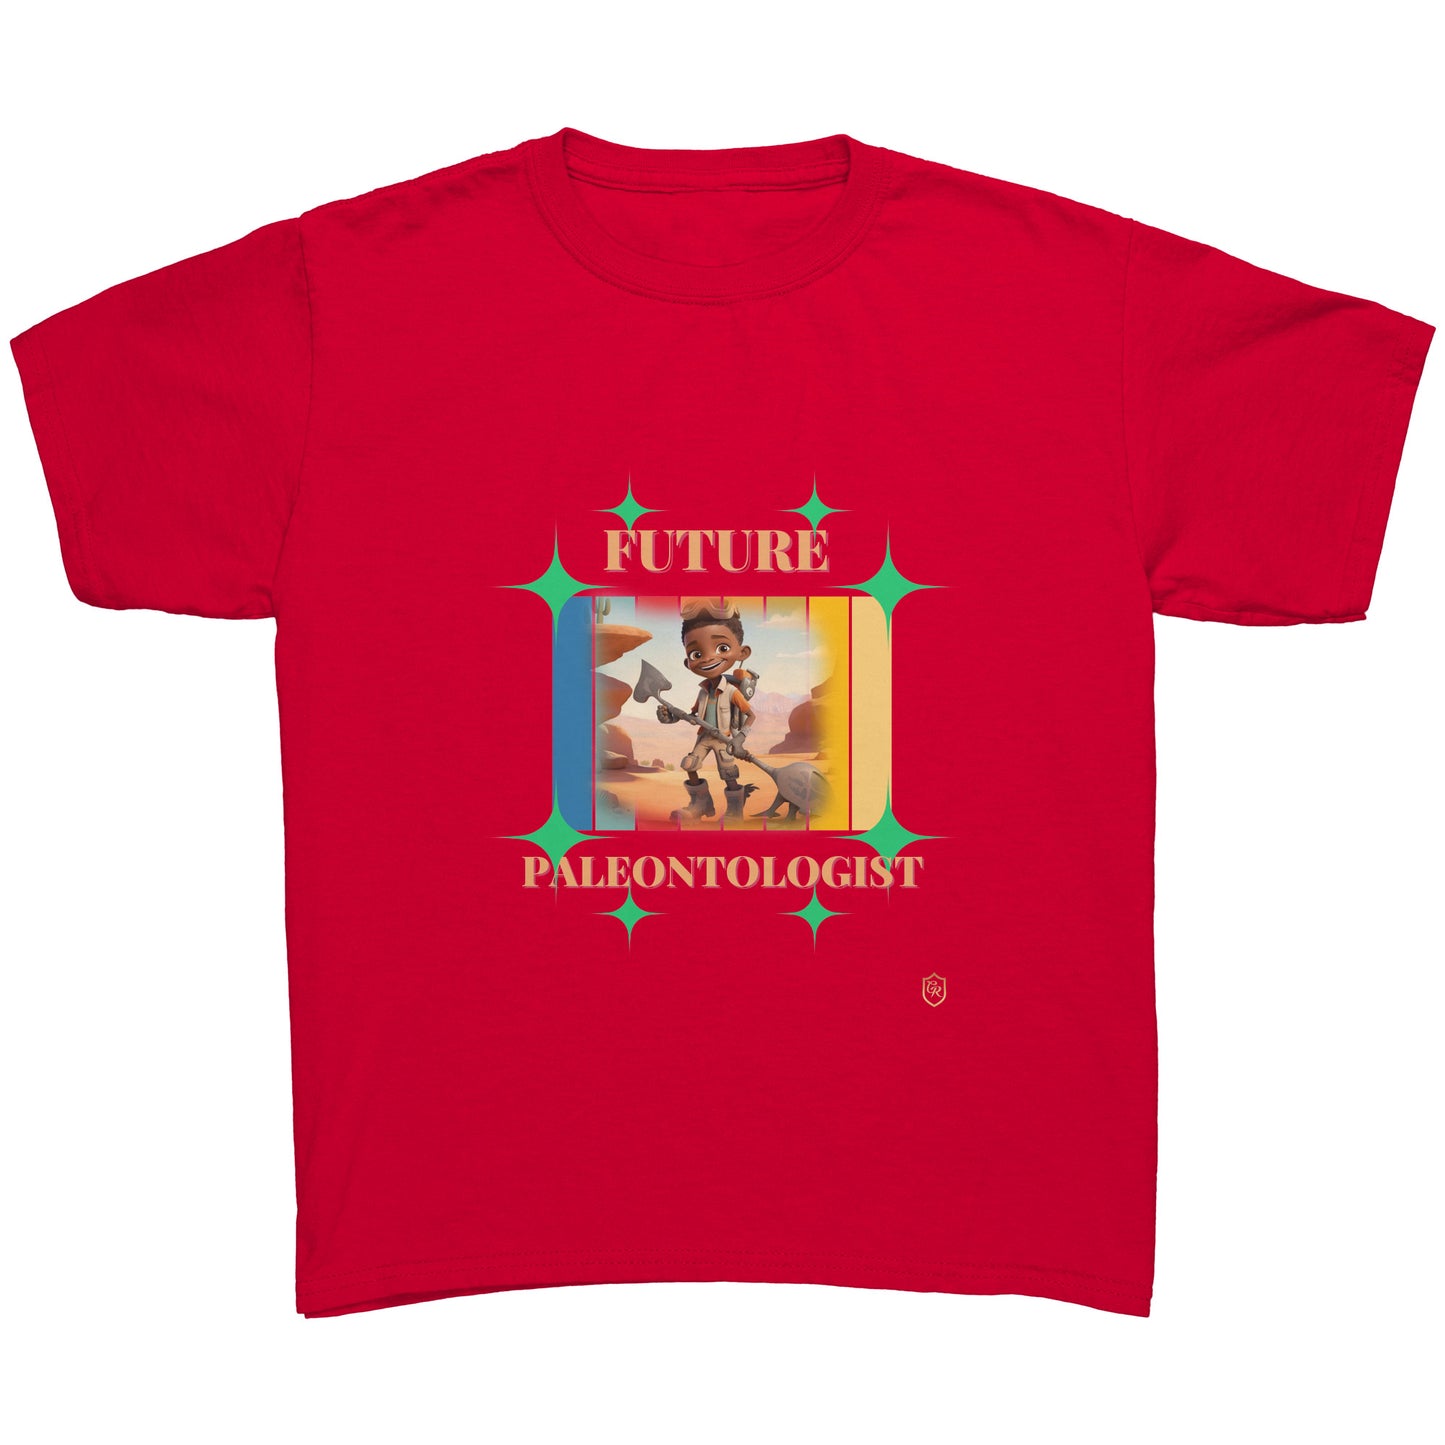 Young Boy's Future Paleontologist T-shirt